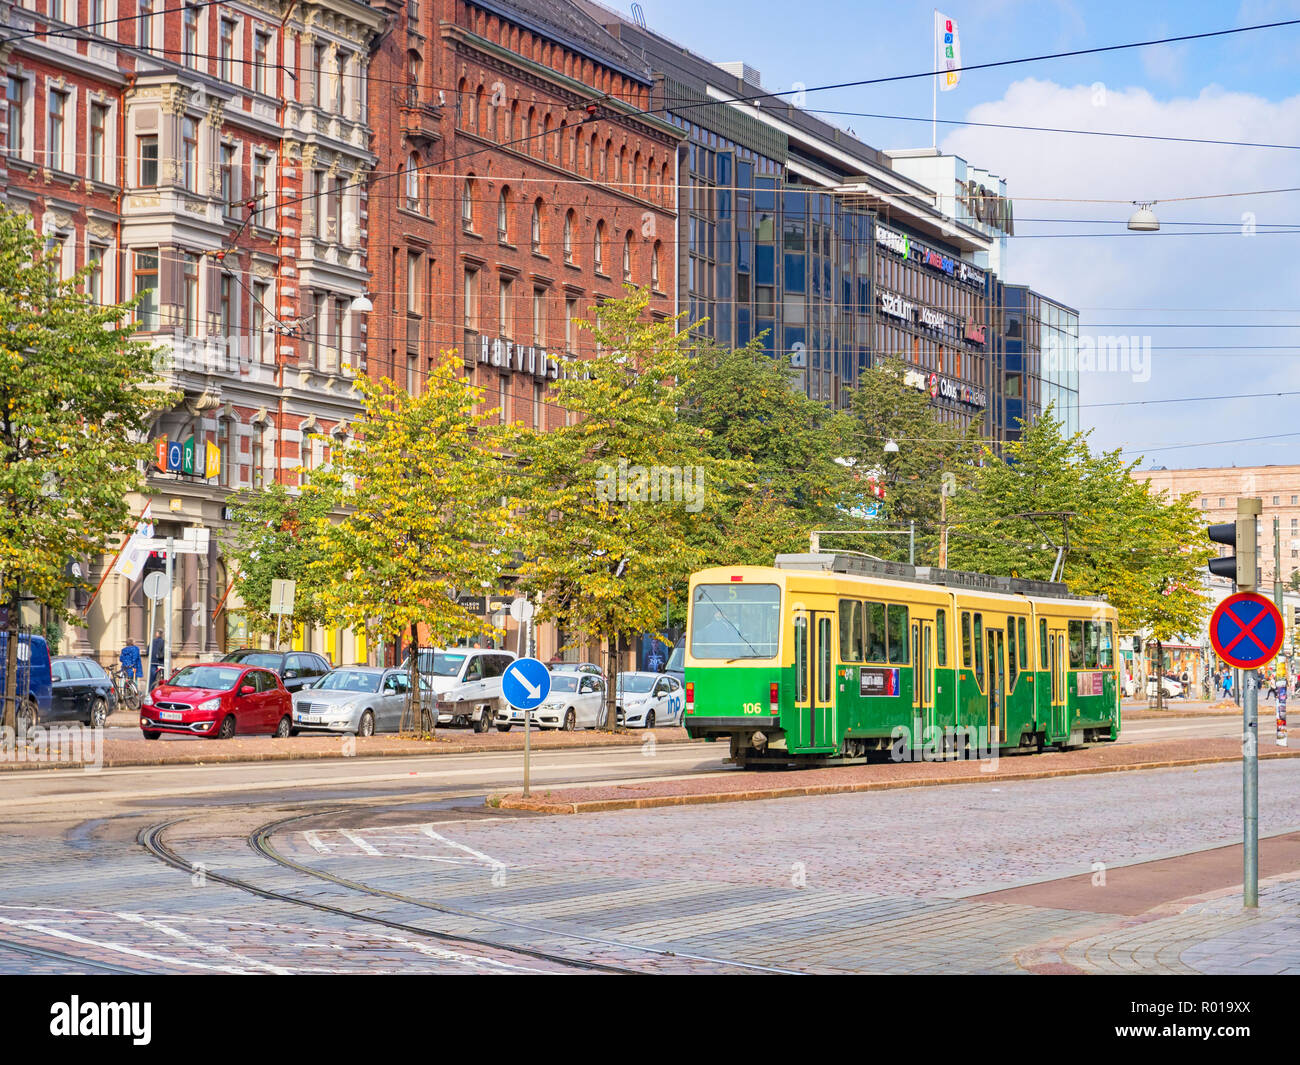 20 September 2018: Helsinki, Finland - Tram in the central city. Stock Photo